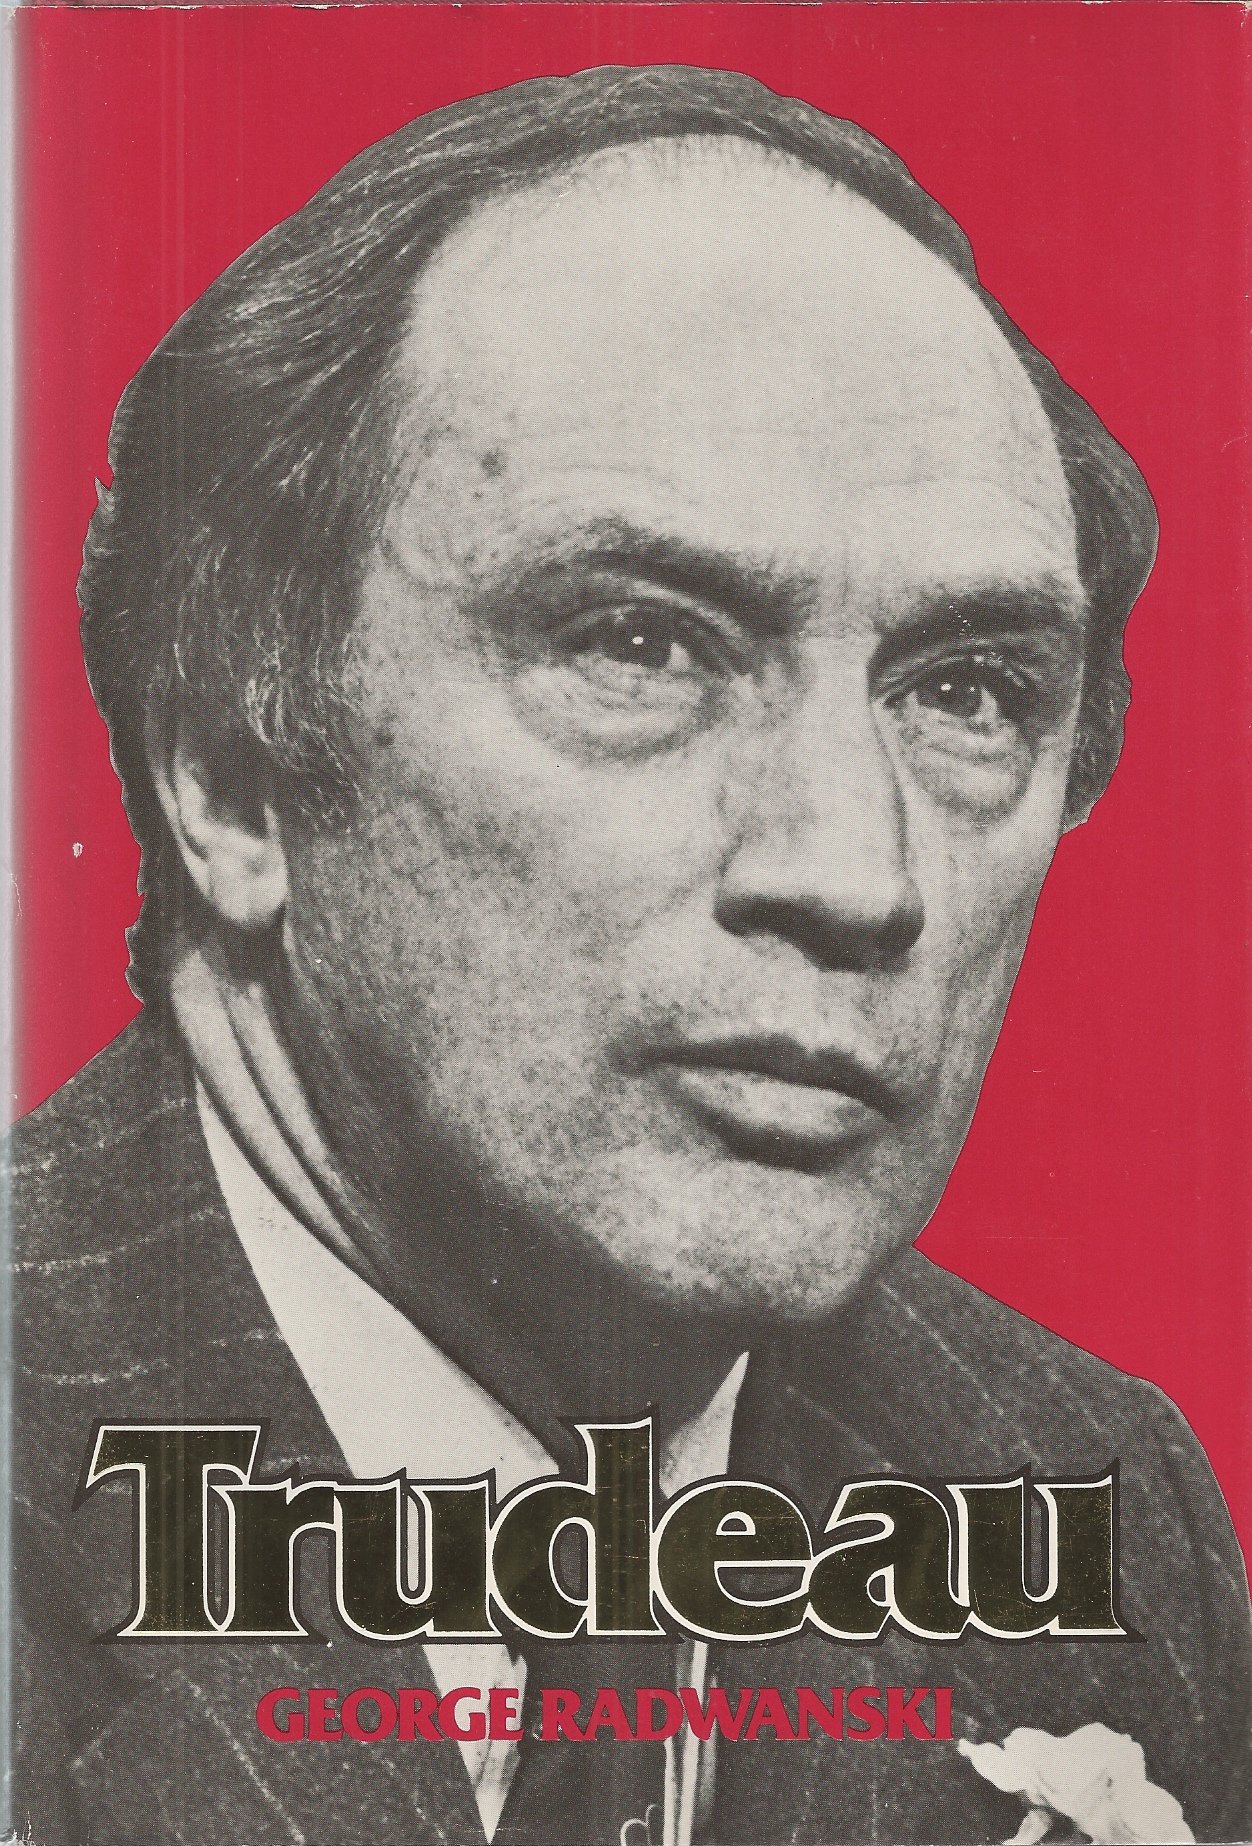 RADWANSKI GEORGE - Trudeau